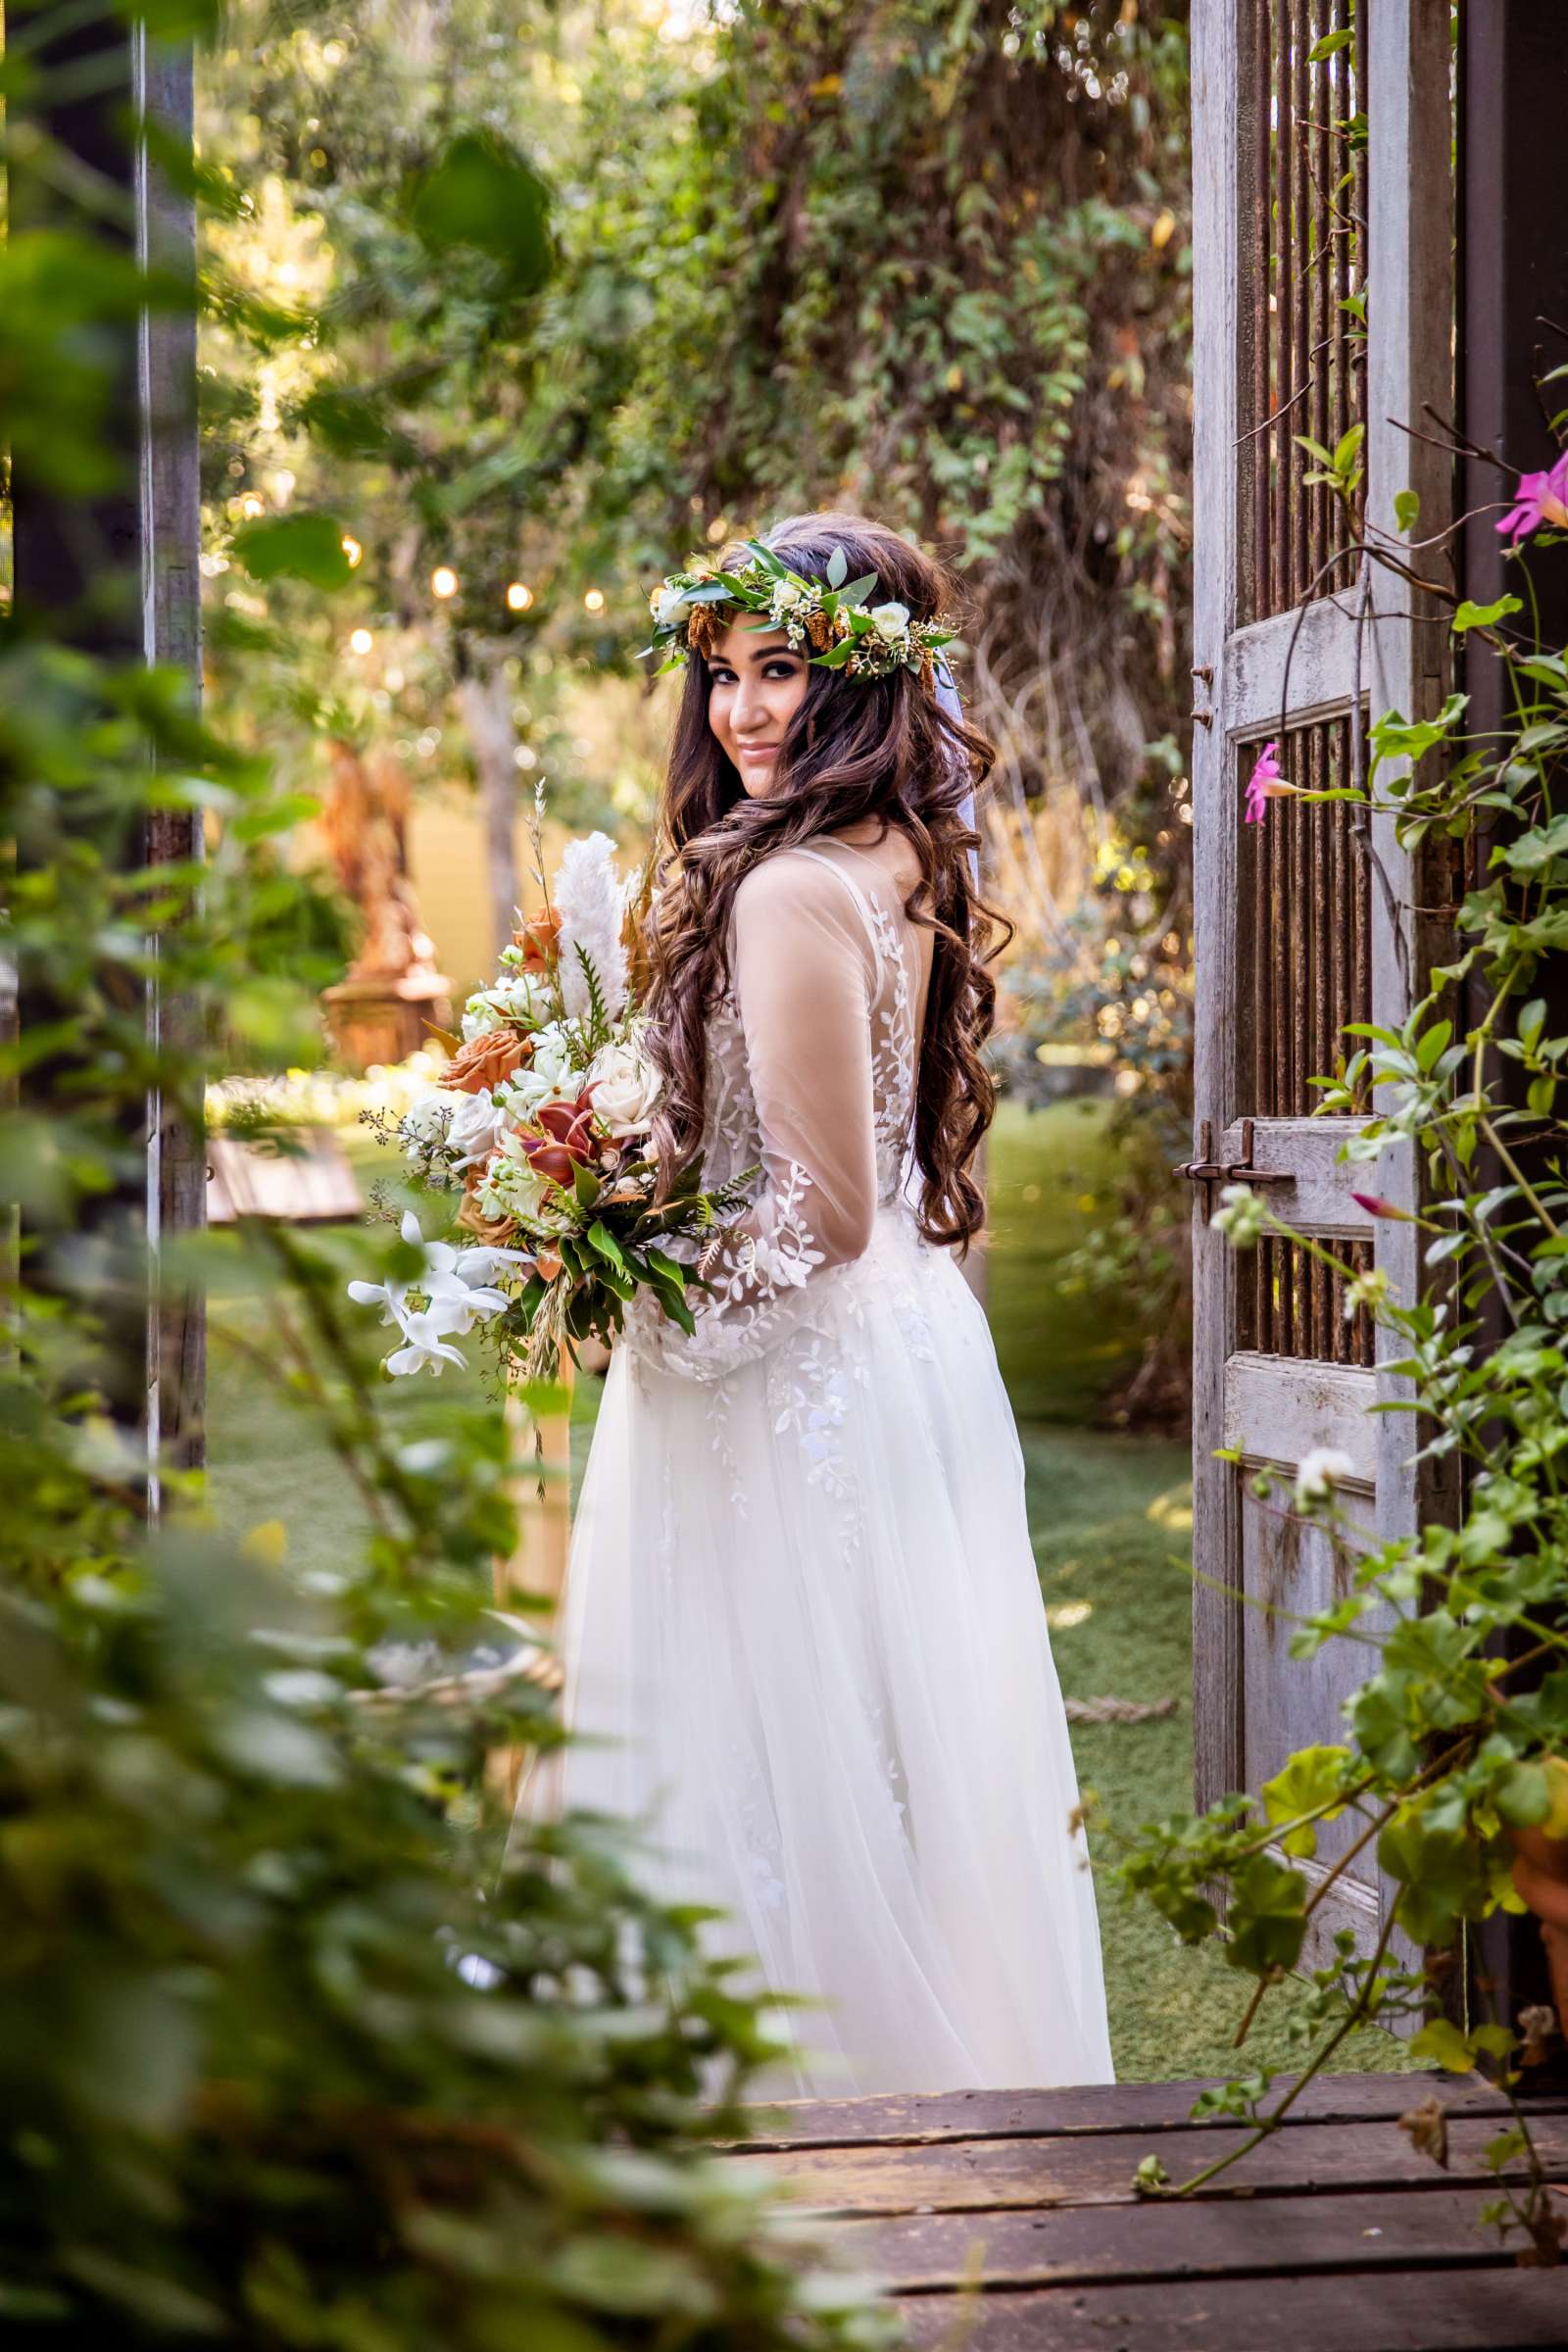 Twin Oaks House & Gardens Wedding Estate Wedding, Vanessa and Nicholas Wedding Photo #2 by True Photography